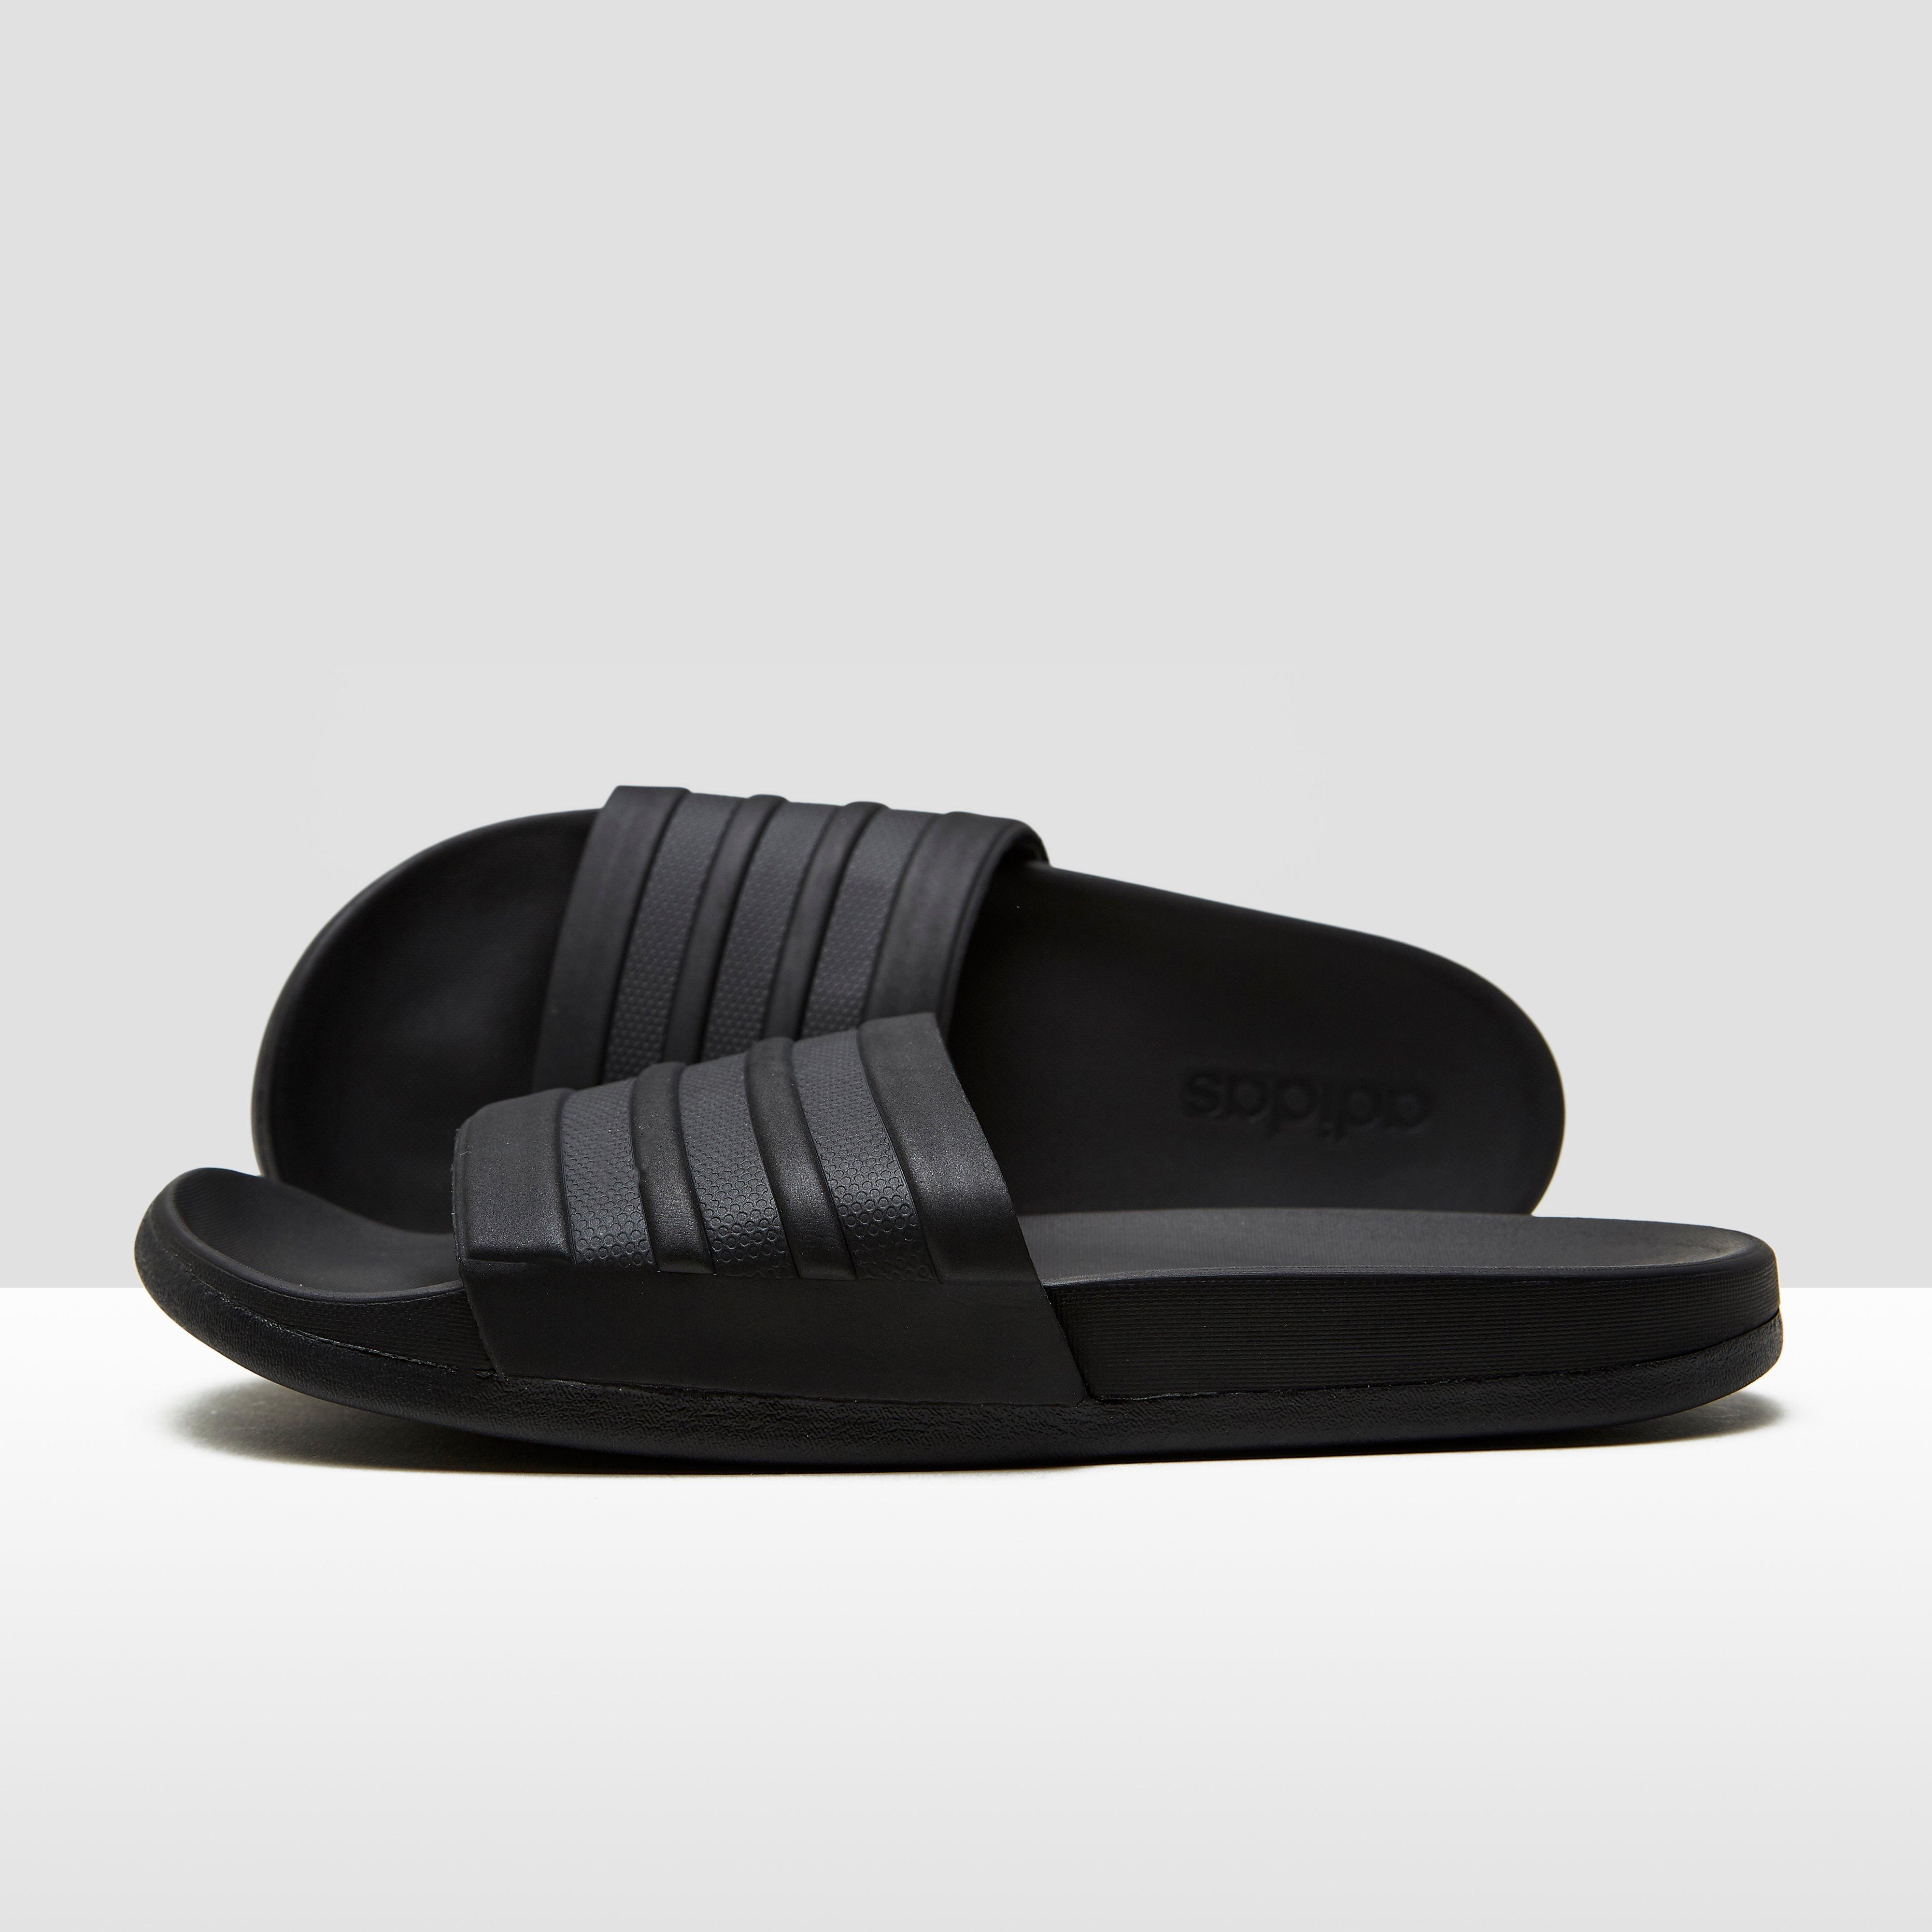 adidas slippers zwart heren Off 52% - www.bashhguidelines.org